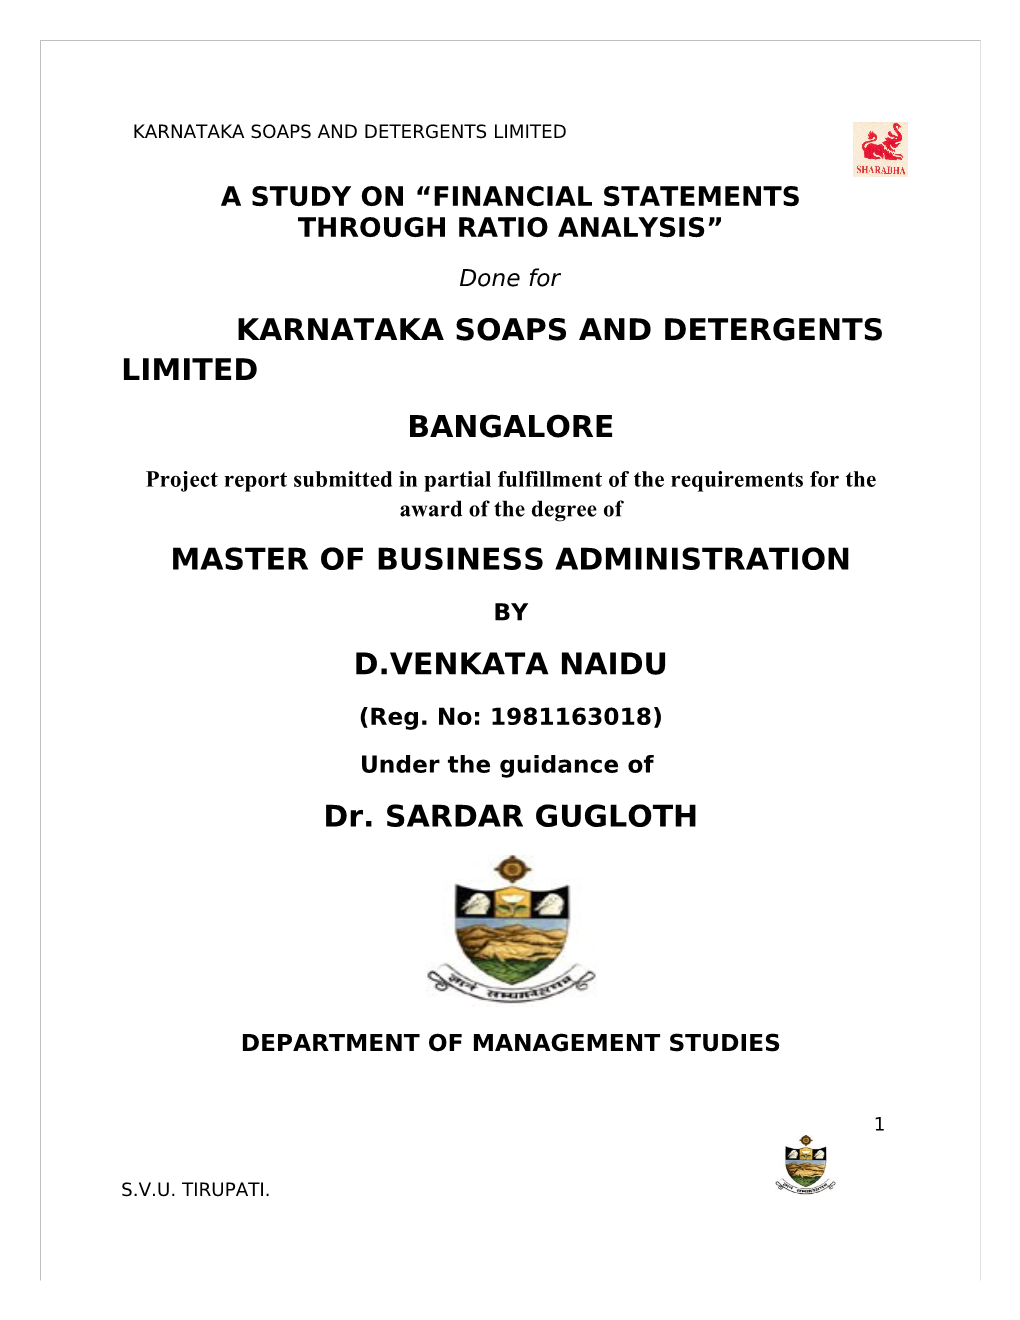 Karnataka Soaps and Detergents Limited